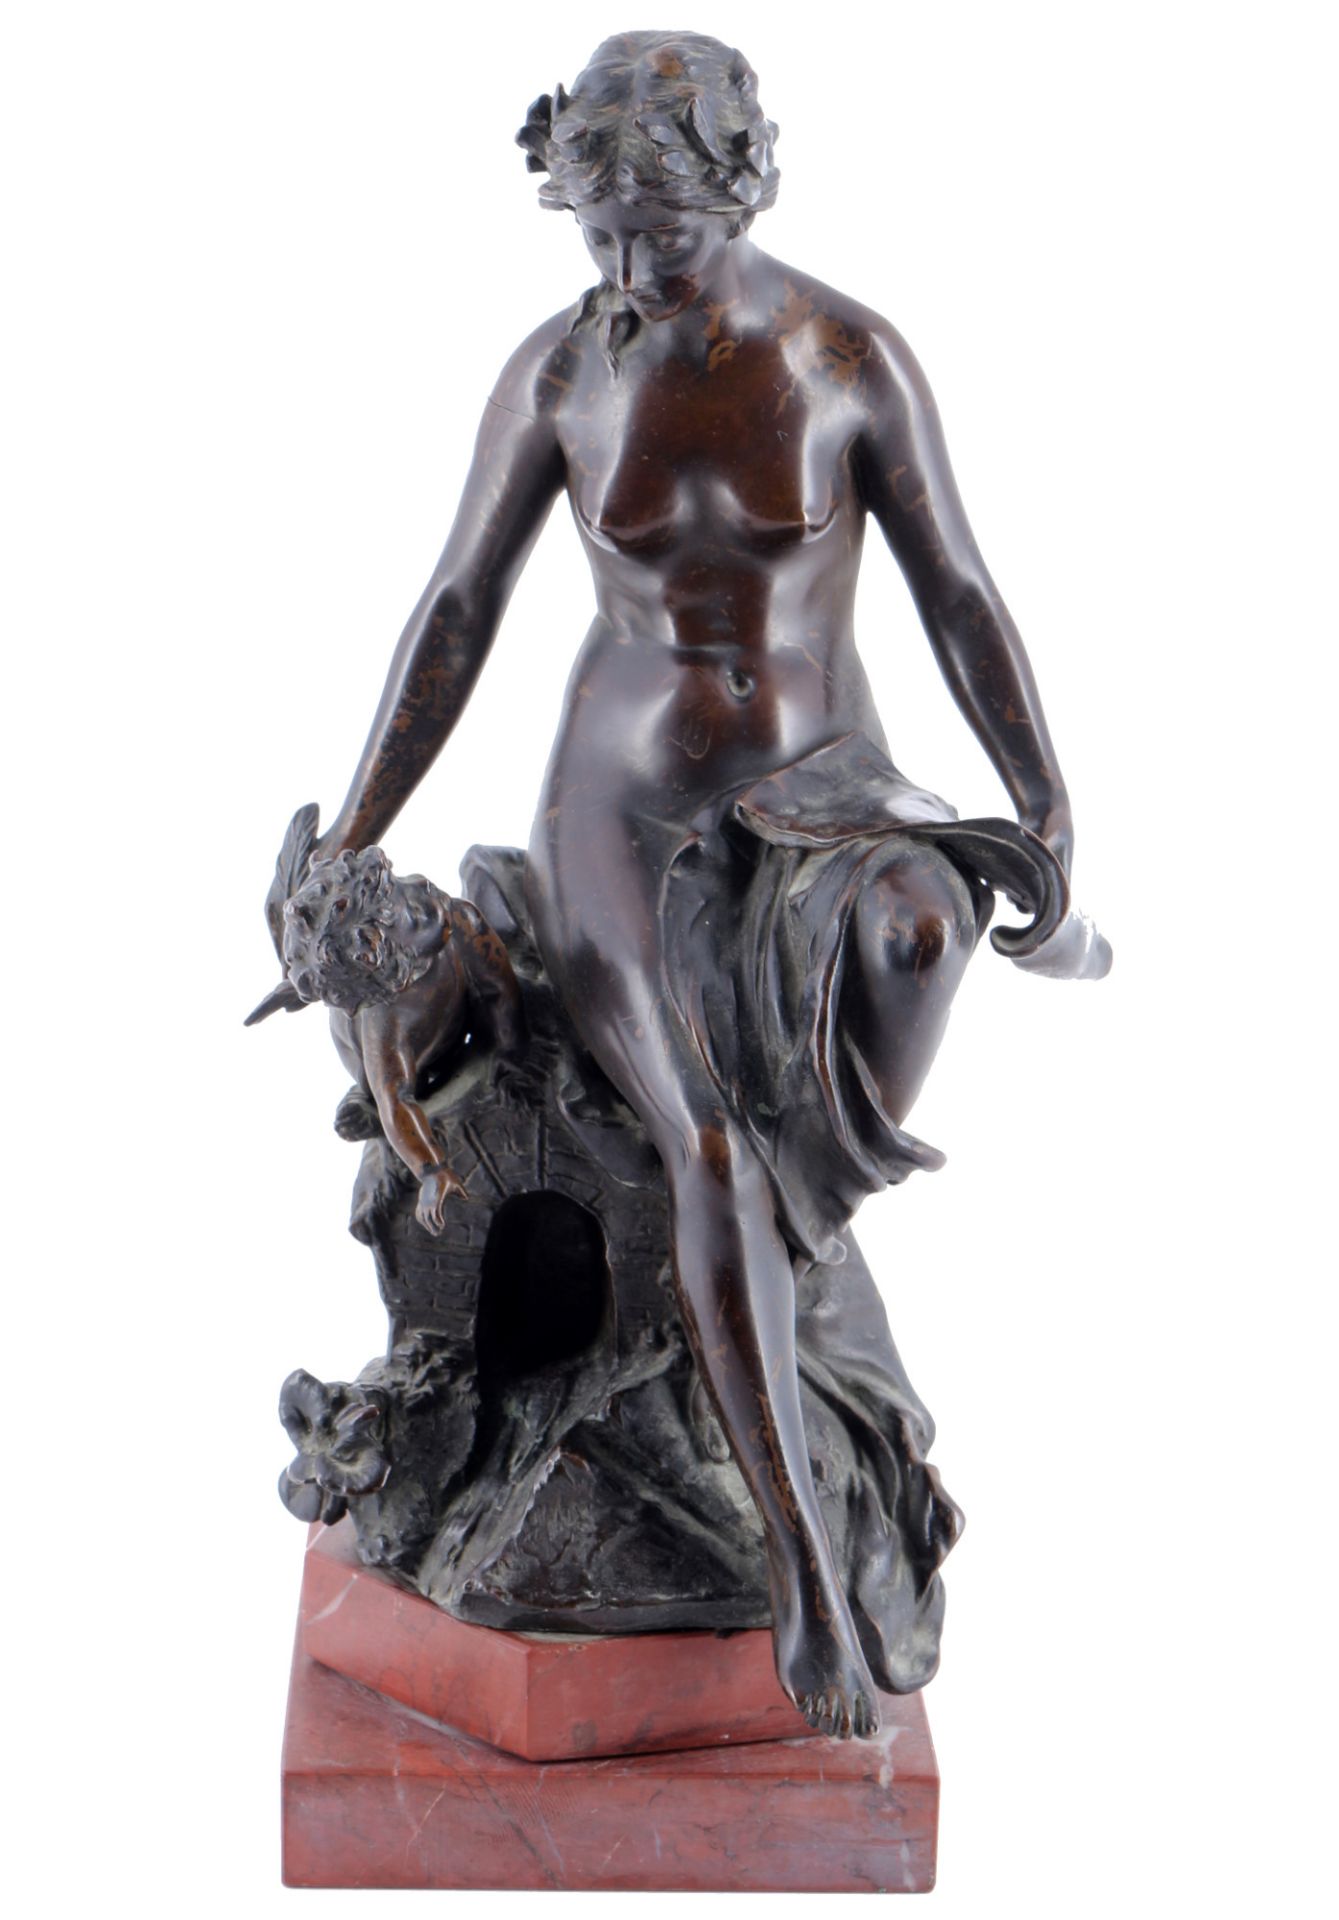 19th century sculptor, J. NEELS, female nude with Cupid, Frauenakt mit Amor